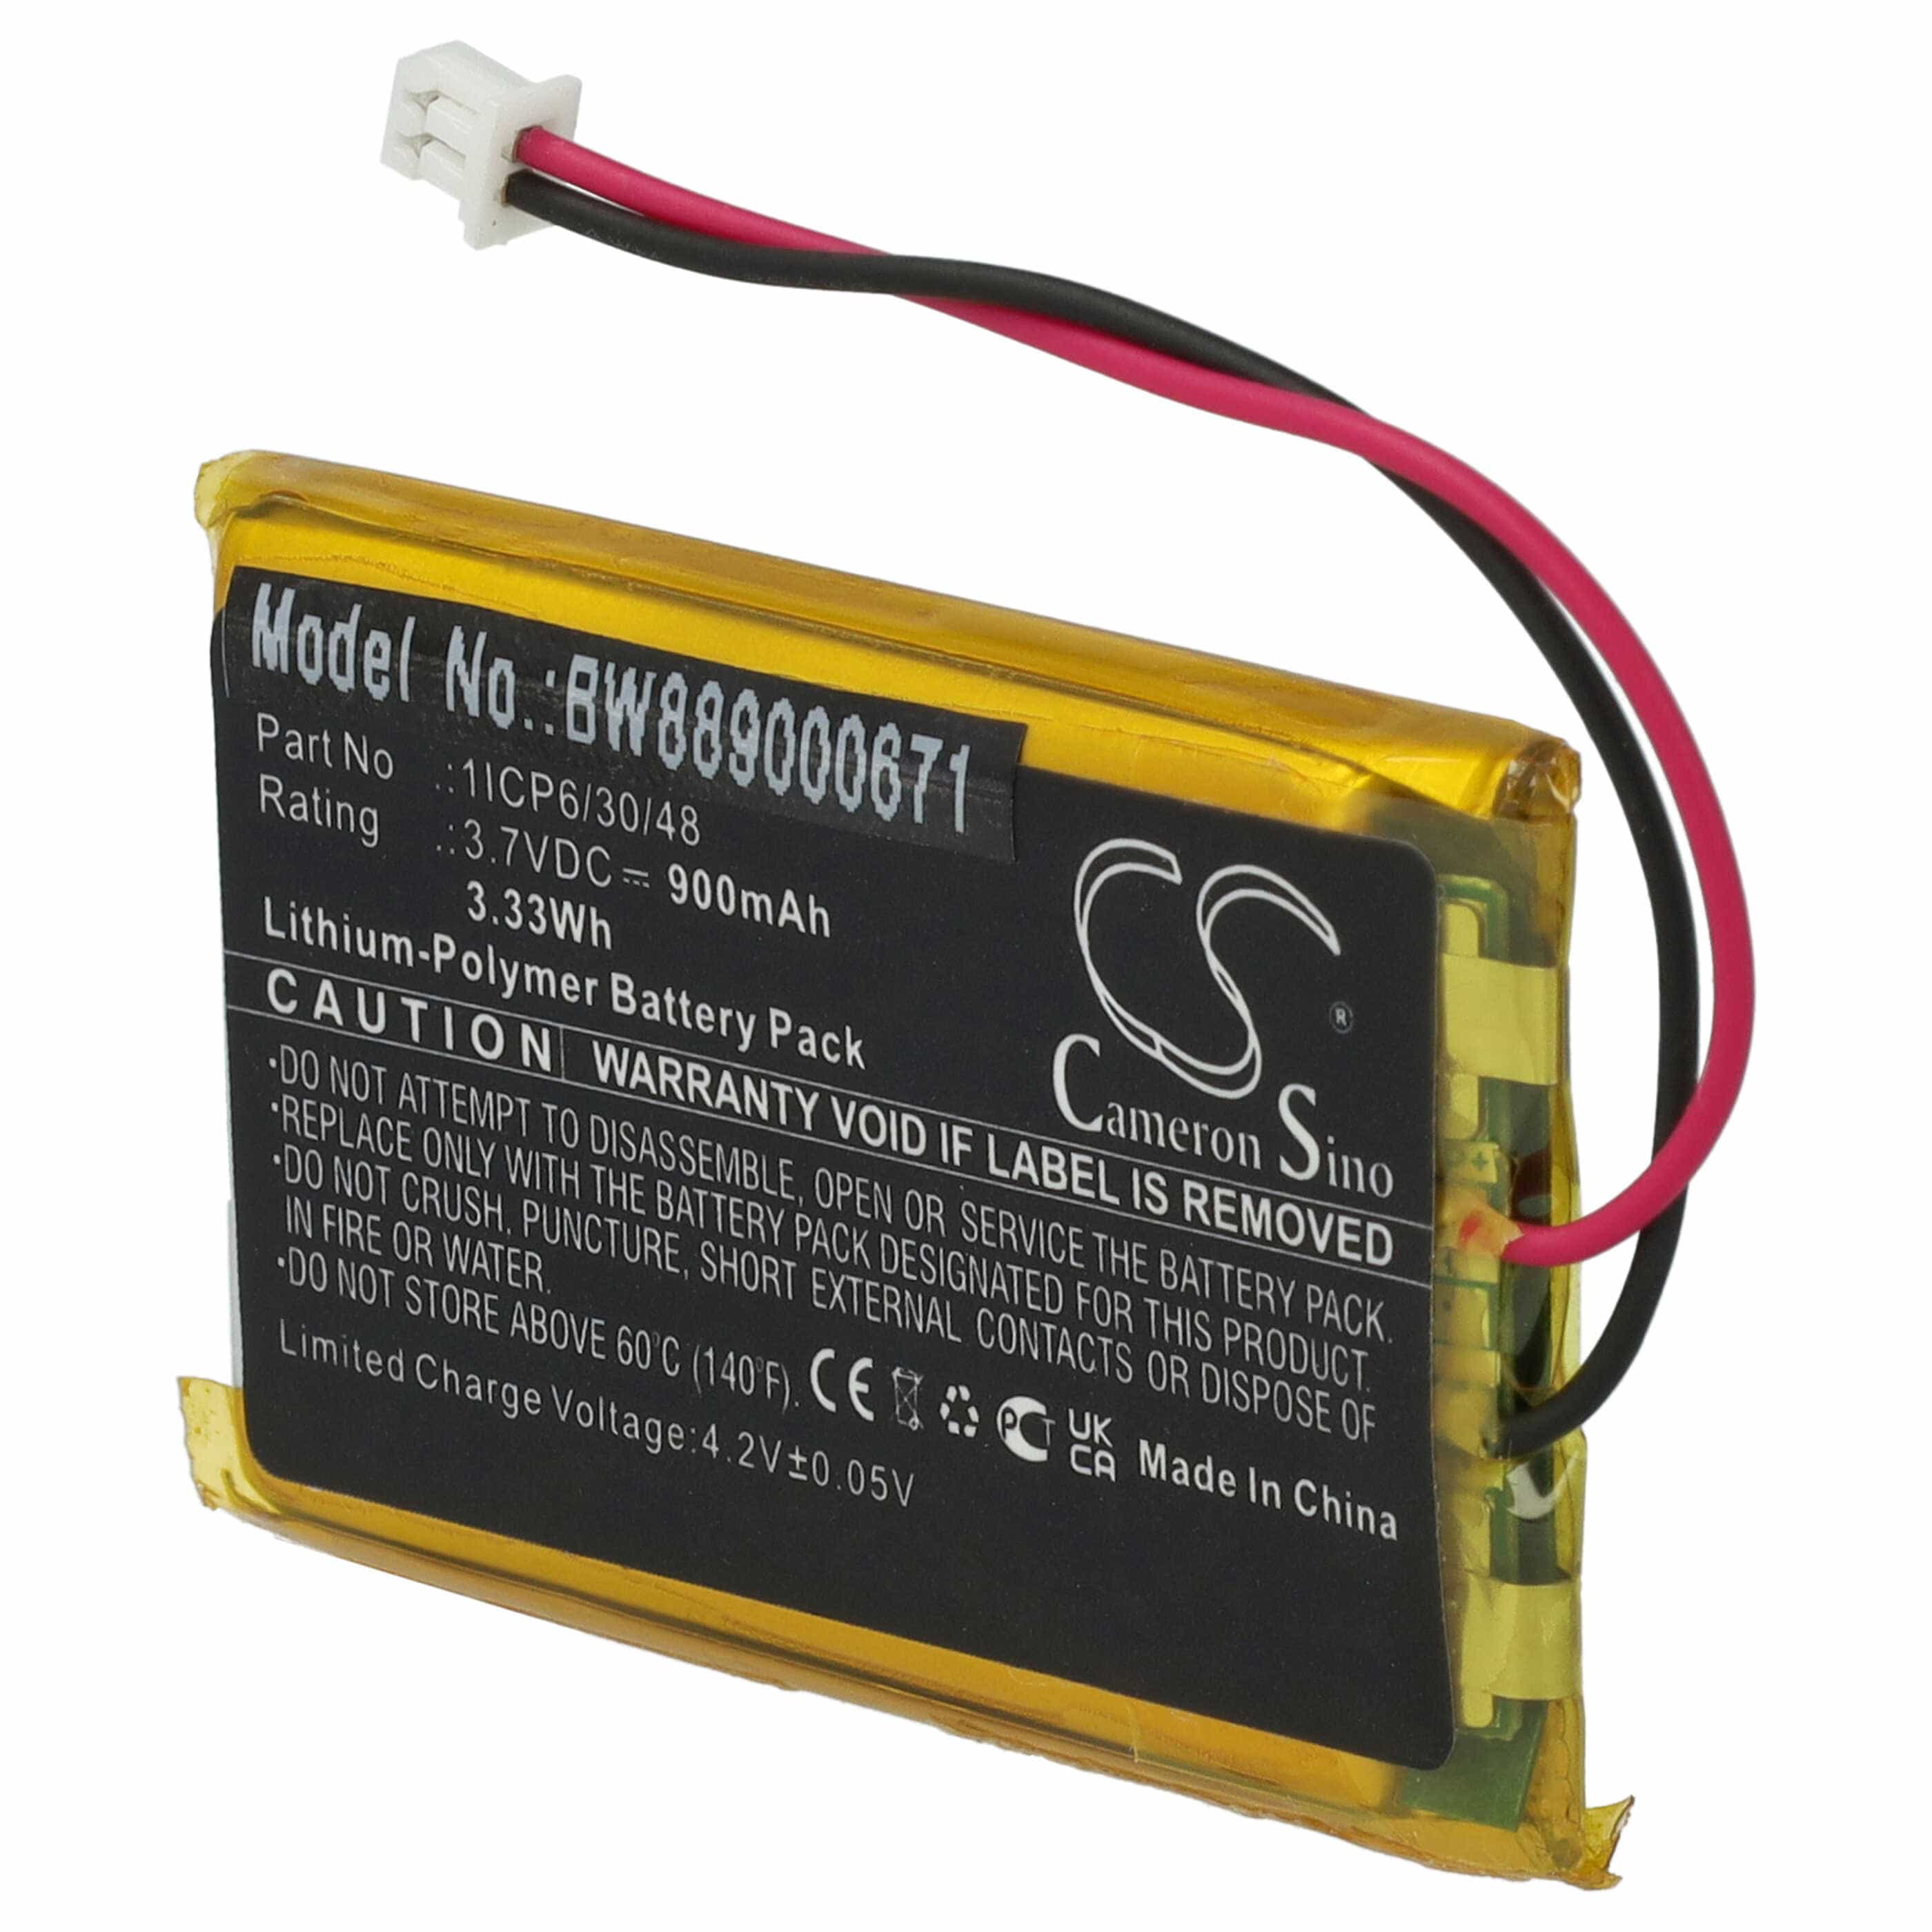 Akumulator do niani elektronicznej zamiennik Sanitas 1ICP6/30/48 - 900 mAh 3,7 V LiPo